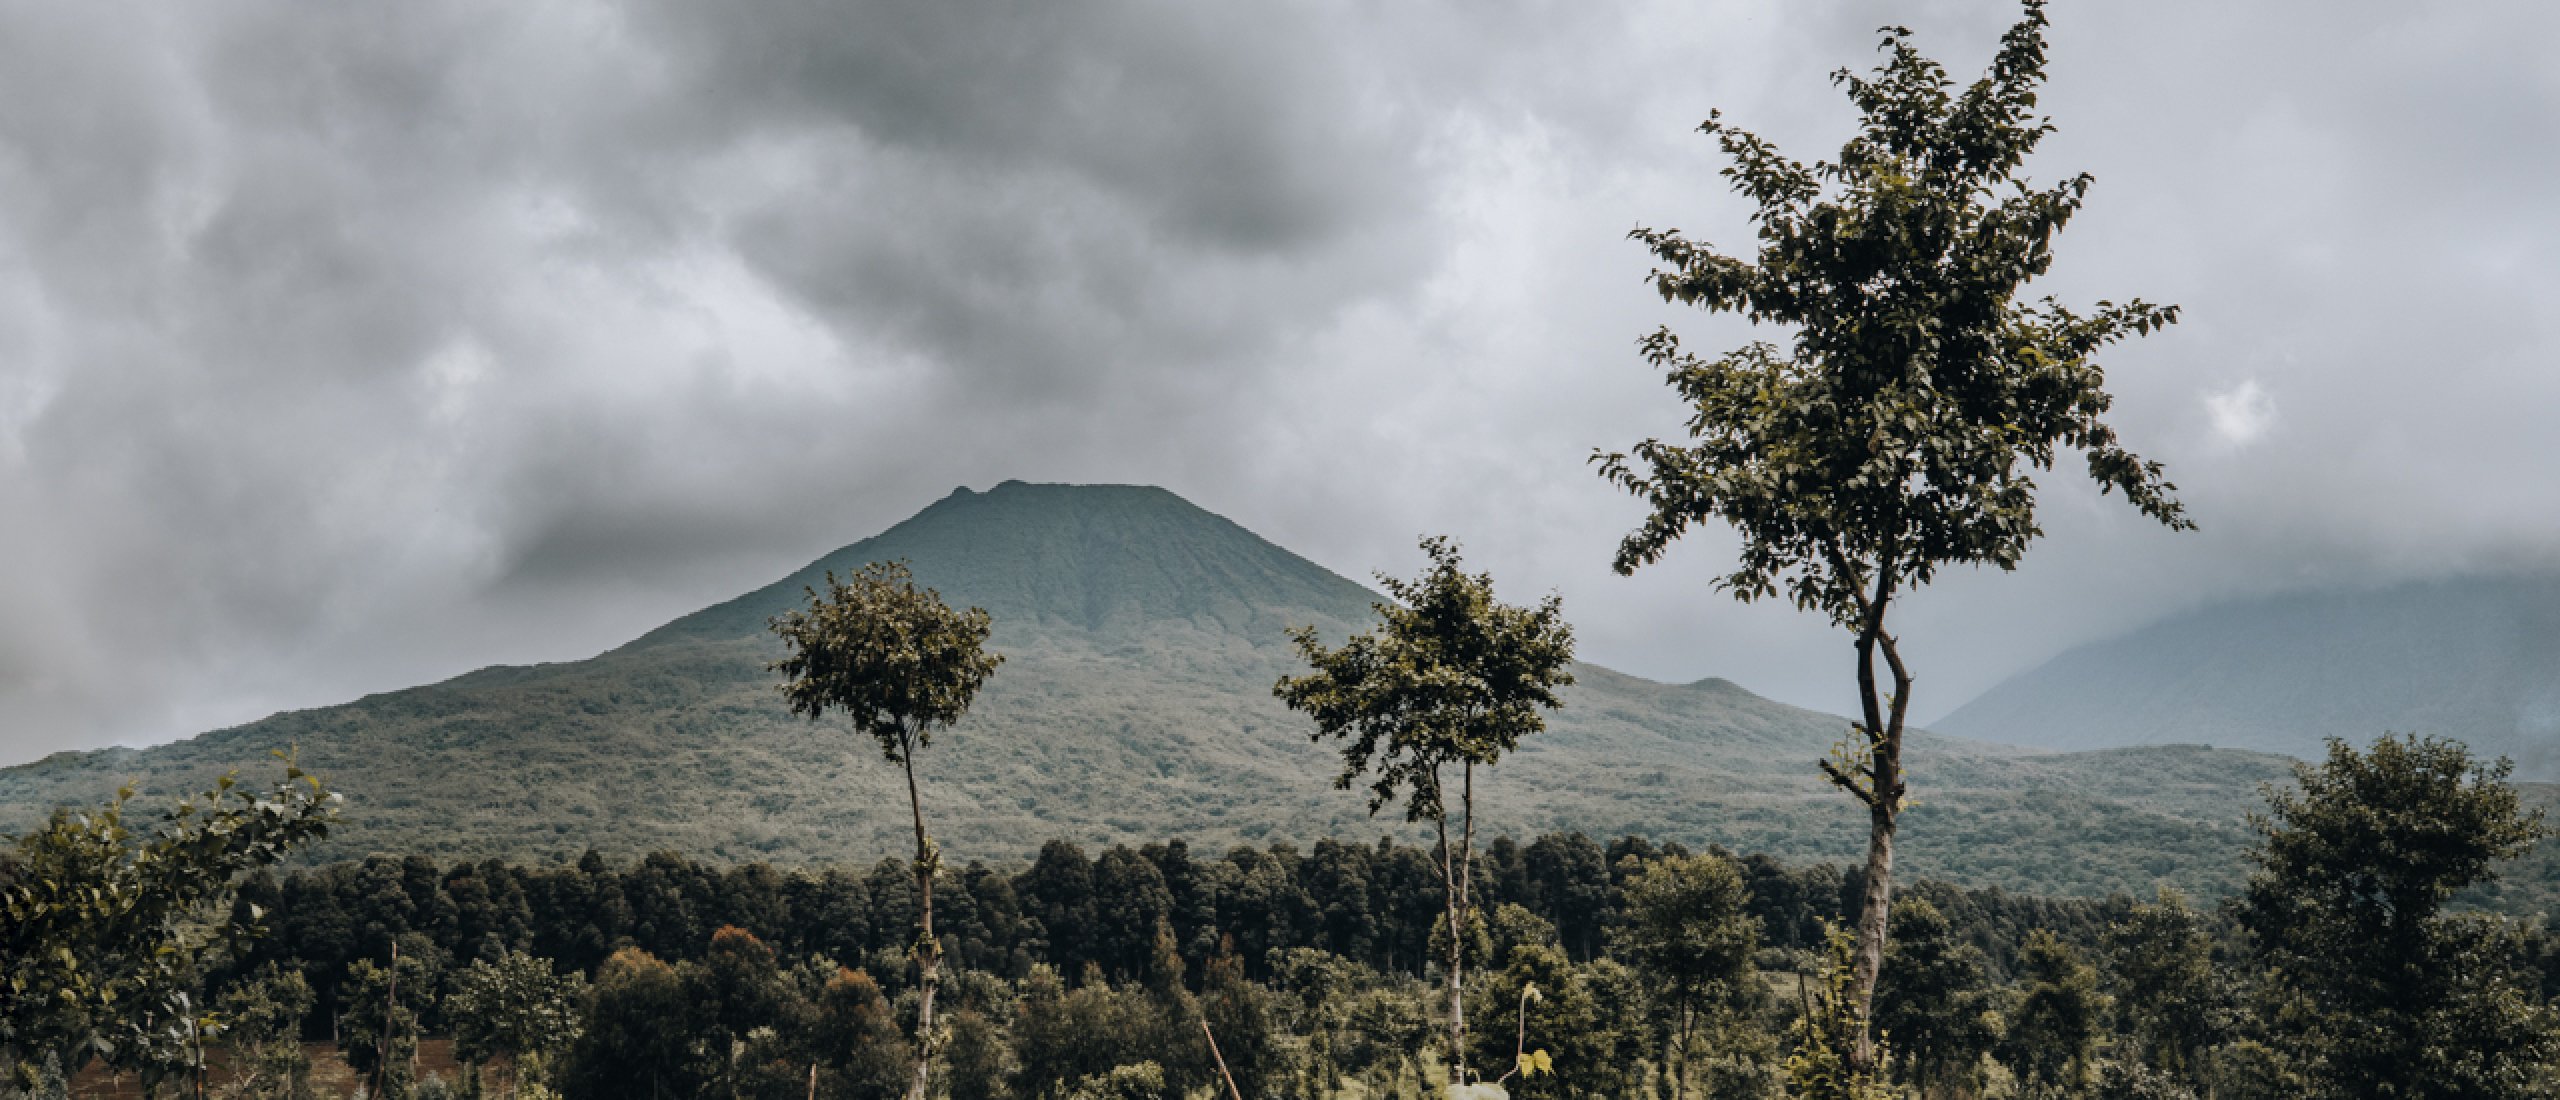 11 Best places to visit in Rwanda